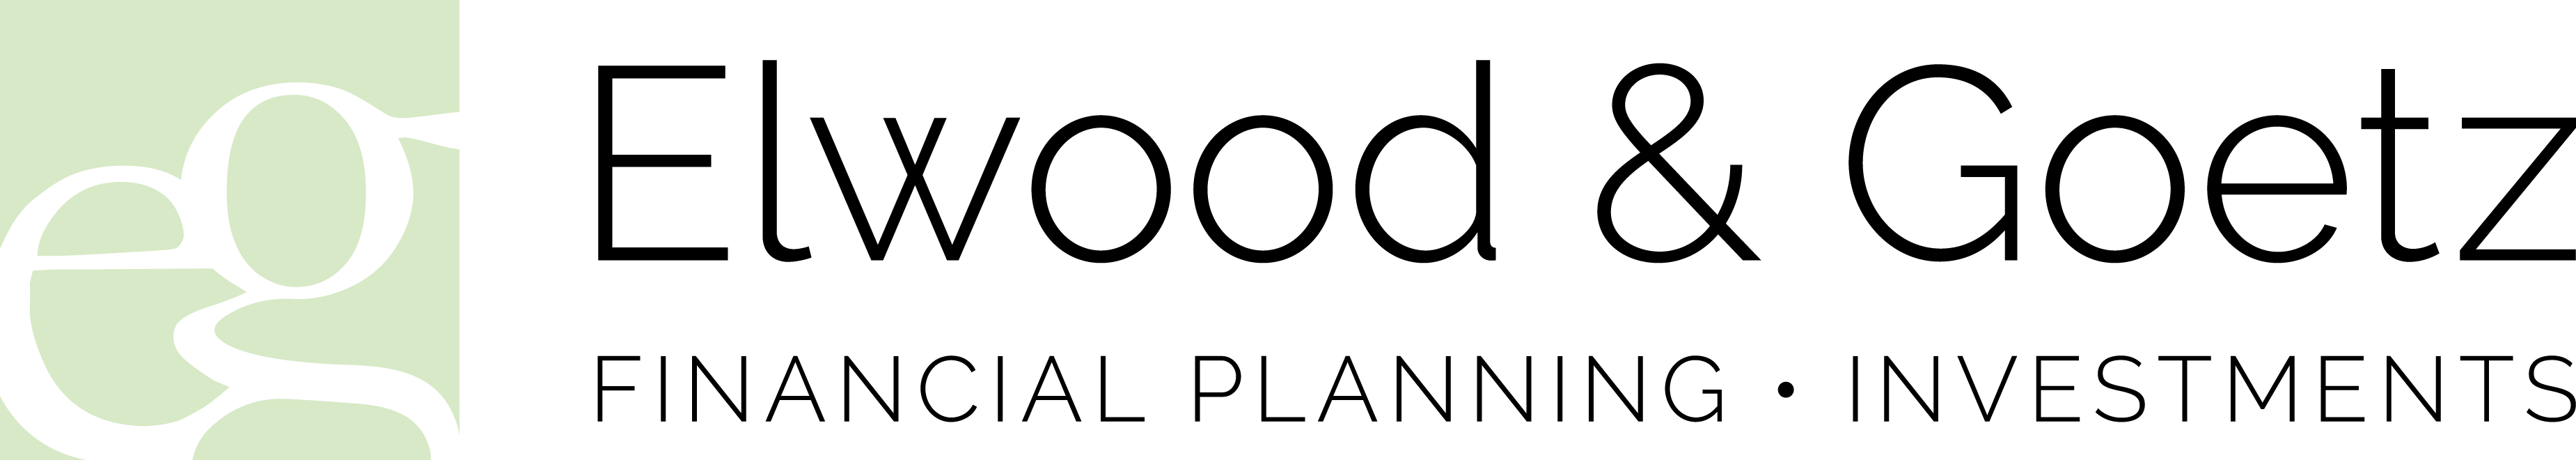 elwood-goetz-logo-horizontal-fullcolor-rgb (002).png